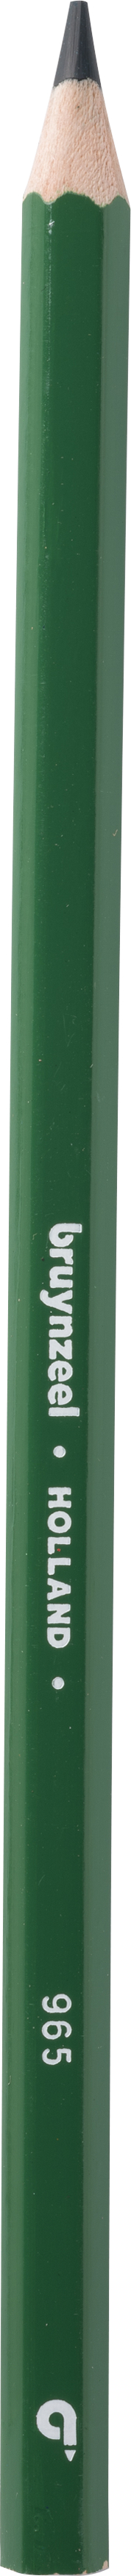 BRUYNZEEL Crayon de couleur Super 3.3mm 60516965 verte foncé